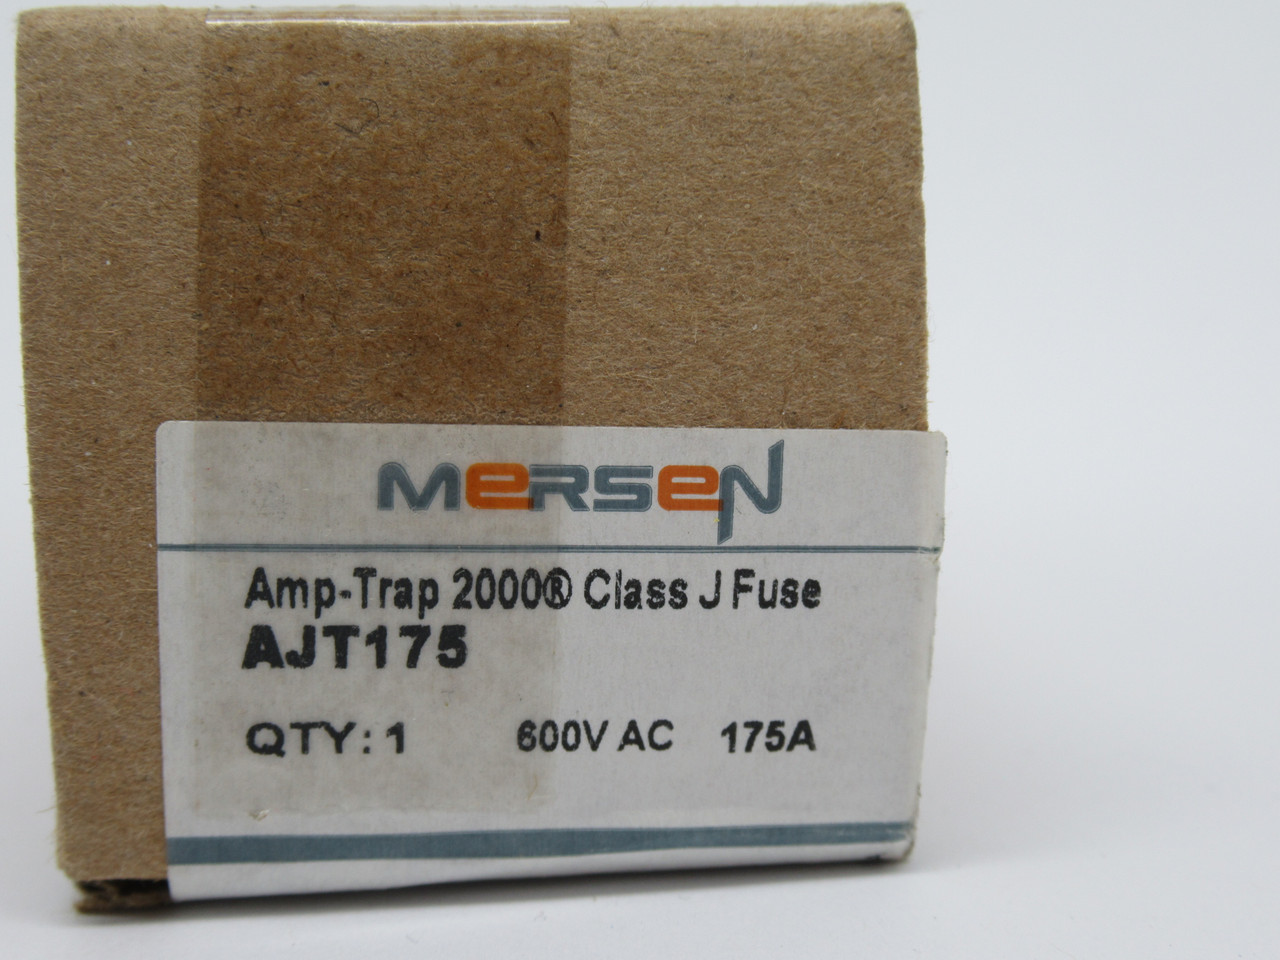 Mersen AJT175 Amp-Trap Smart Spot Class J Fuse 600V 175A NEW